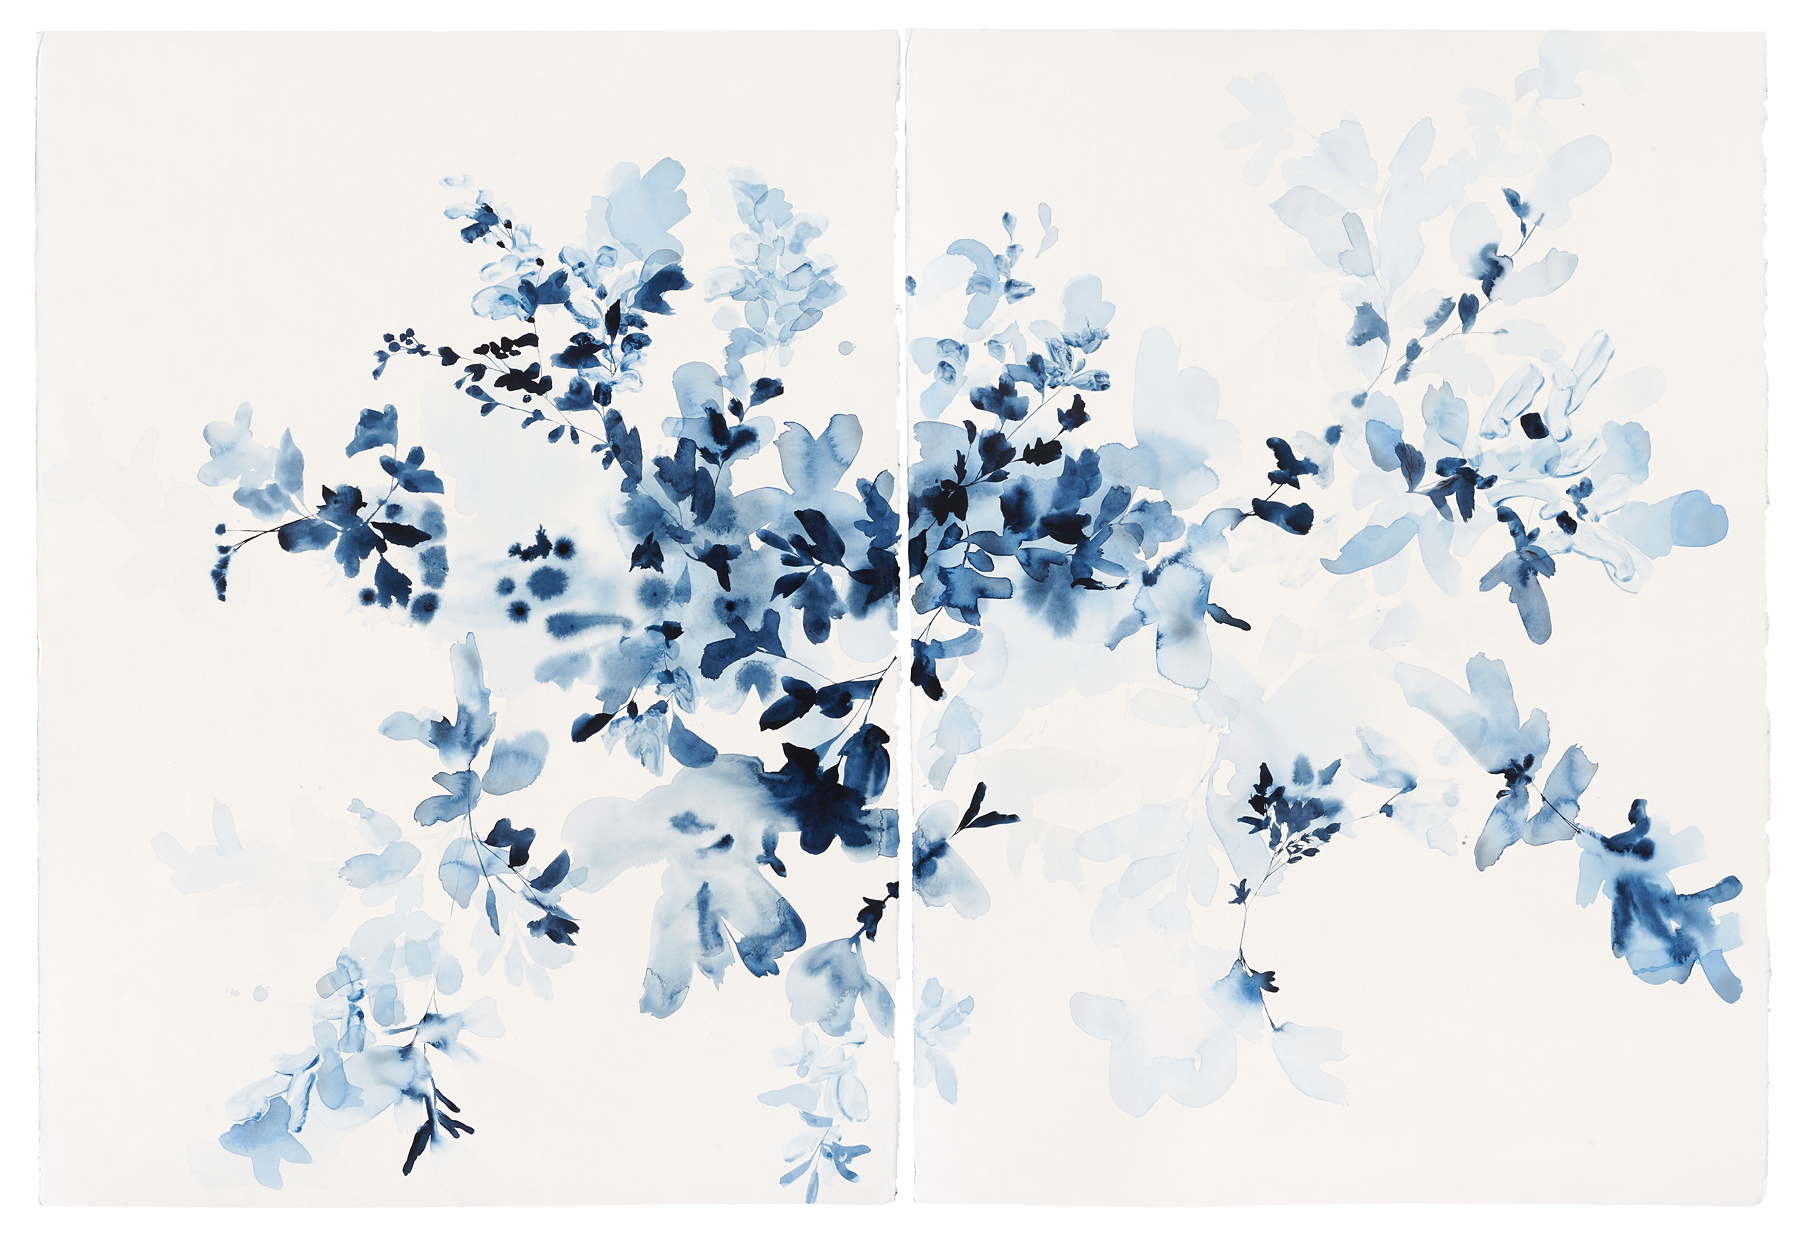 Indigo Brush-A19, 2019, mixed media on paper, 41 x 59" (2 @ 41 x 29.5" each)